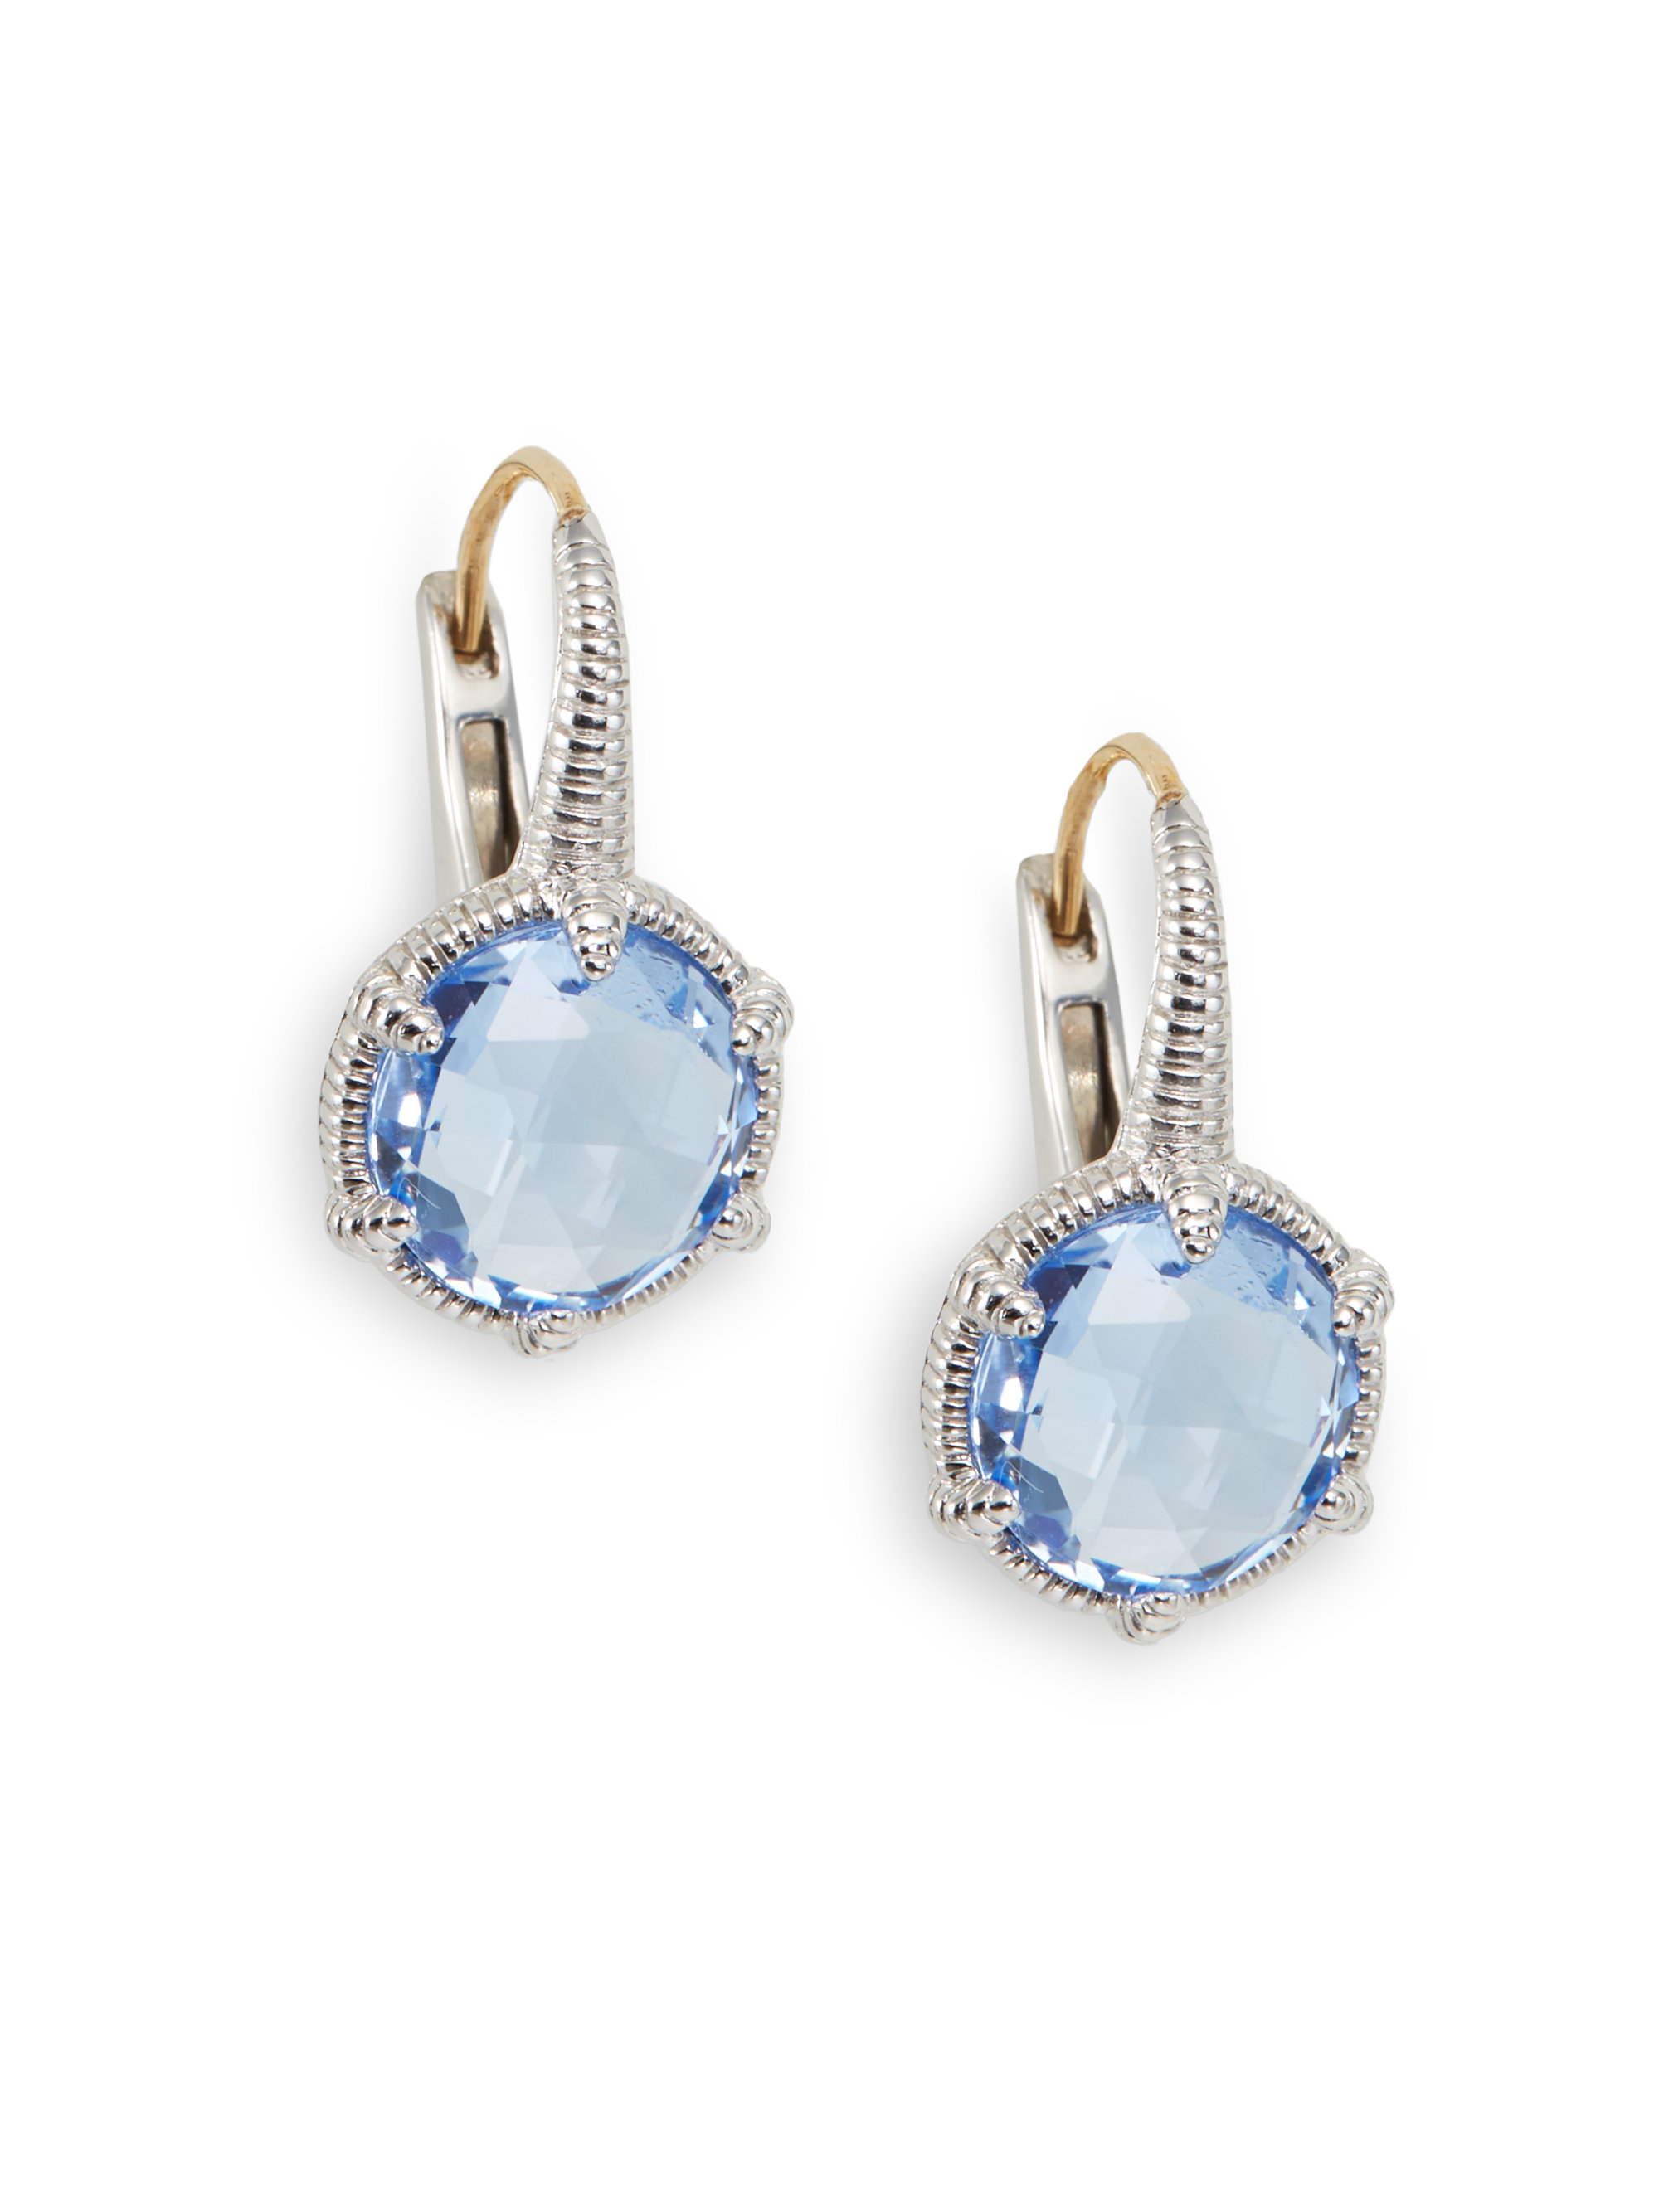 Argent Sterling Simulé Opale Bleu Luxe Climb ramper Earring Jewerly Women